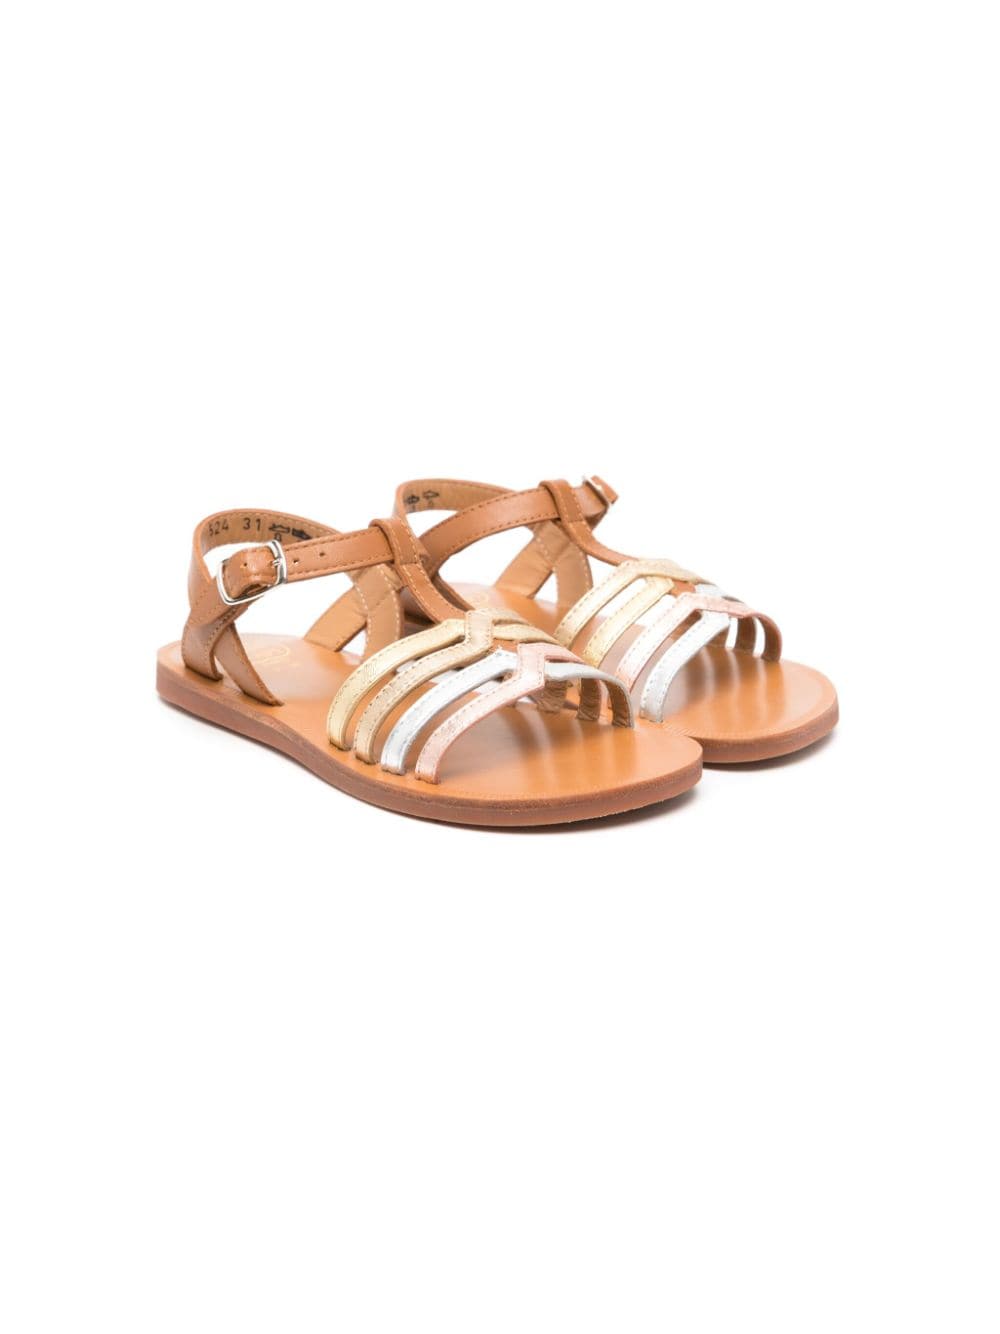 Pom D'api metallic leather sandals - Brown von Pom D'api